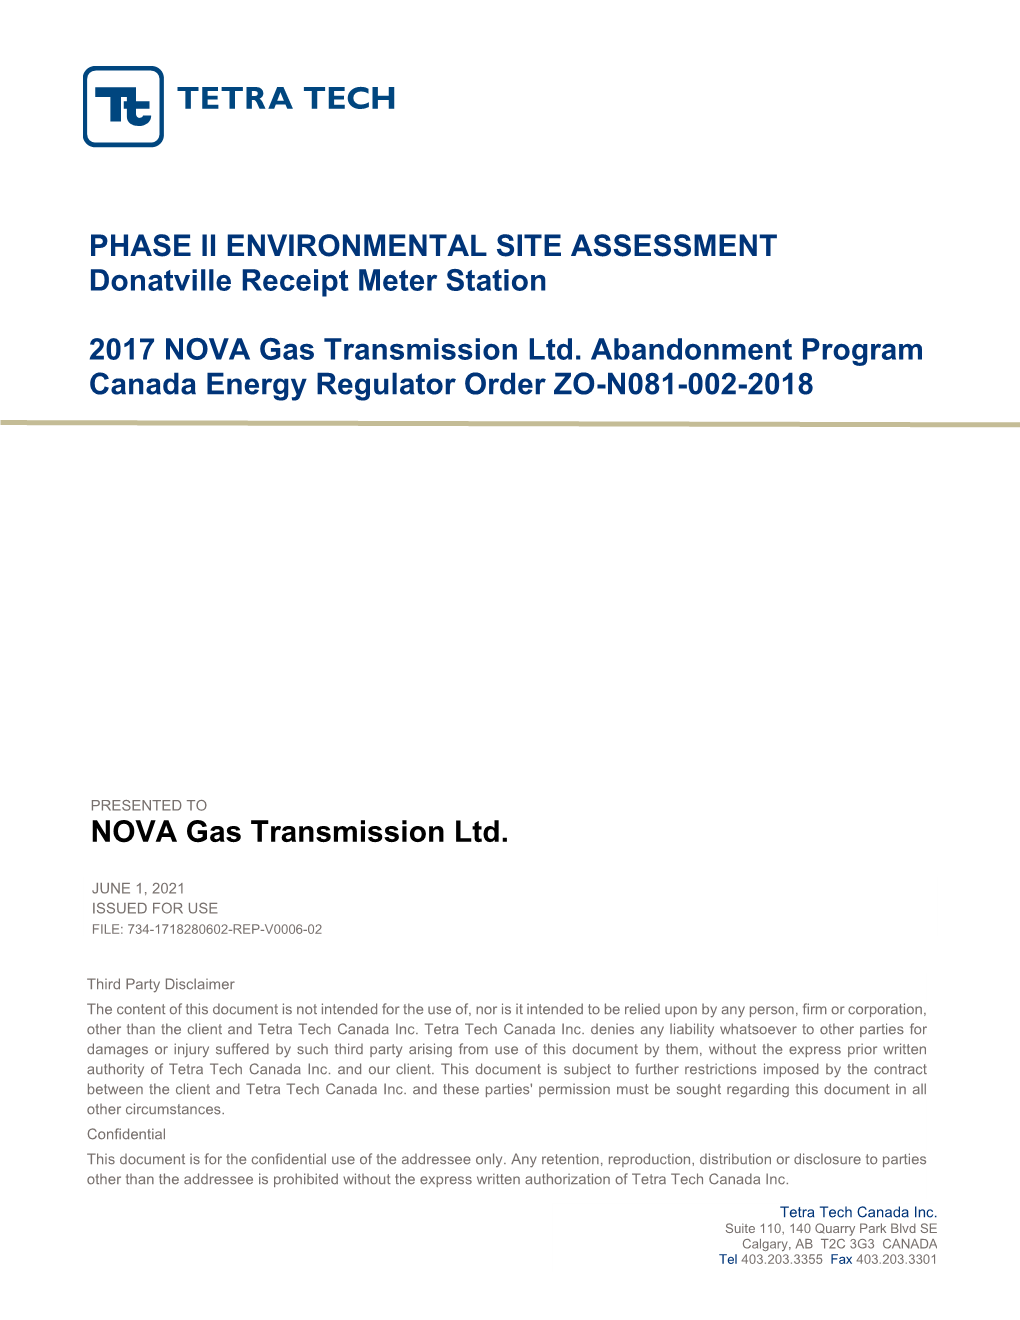 Phase Ii Environmental Site Assessment – Donatville Receipt Meter Station File: 734-1718280602-Rep-V0006-02 | June 1, 2021 | Issued for Use